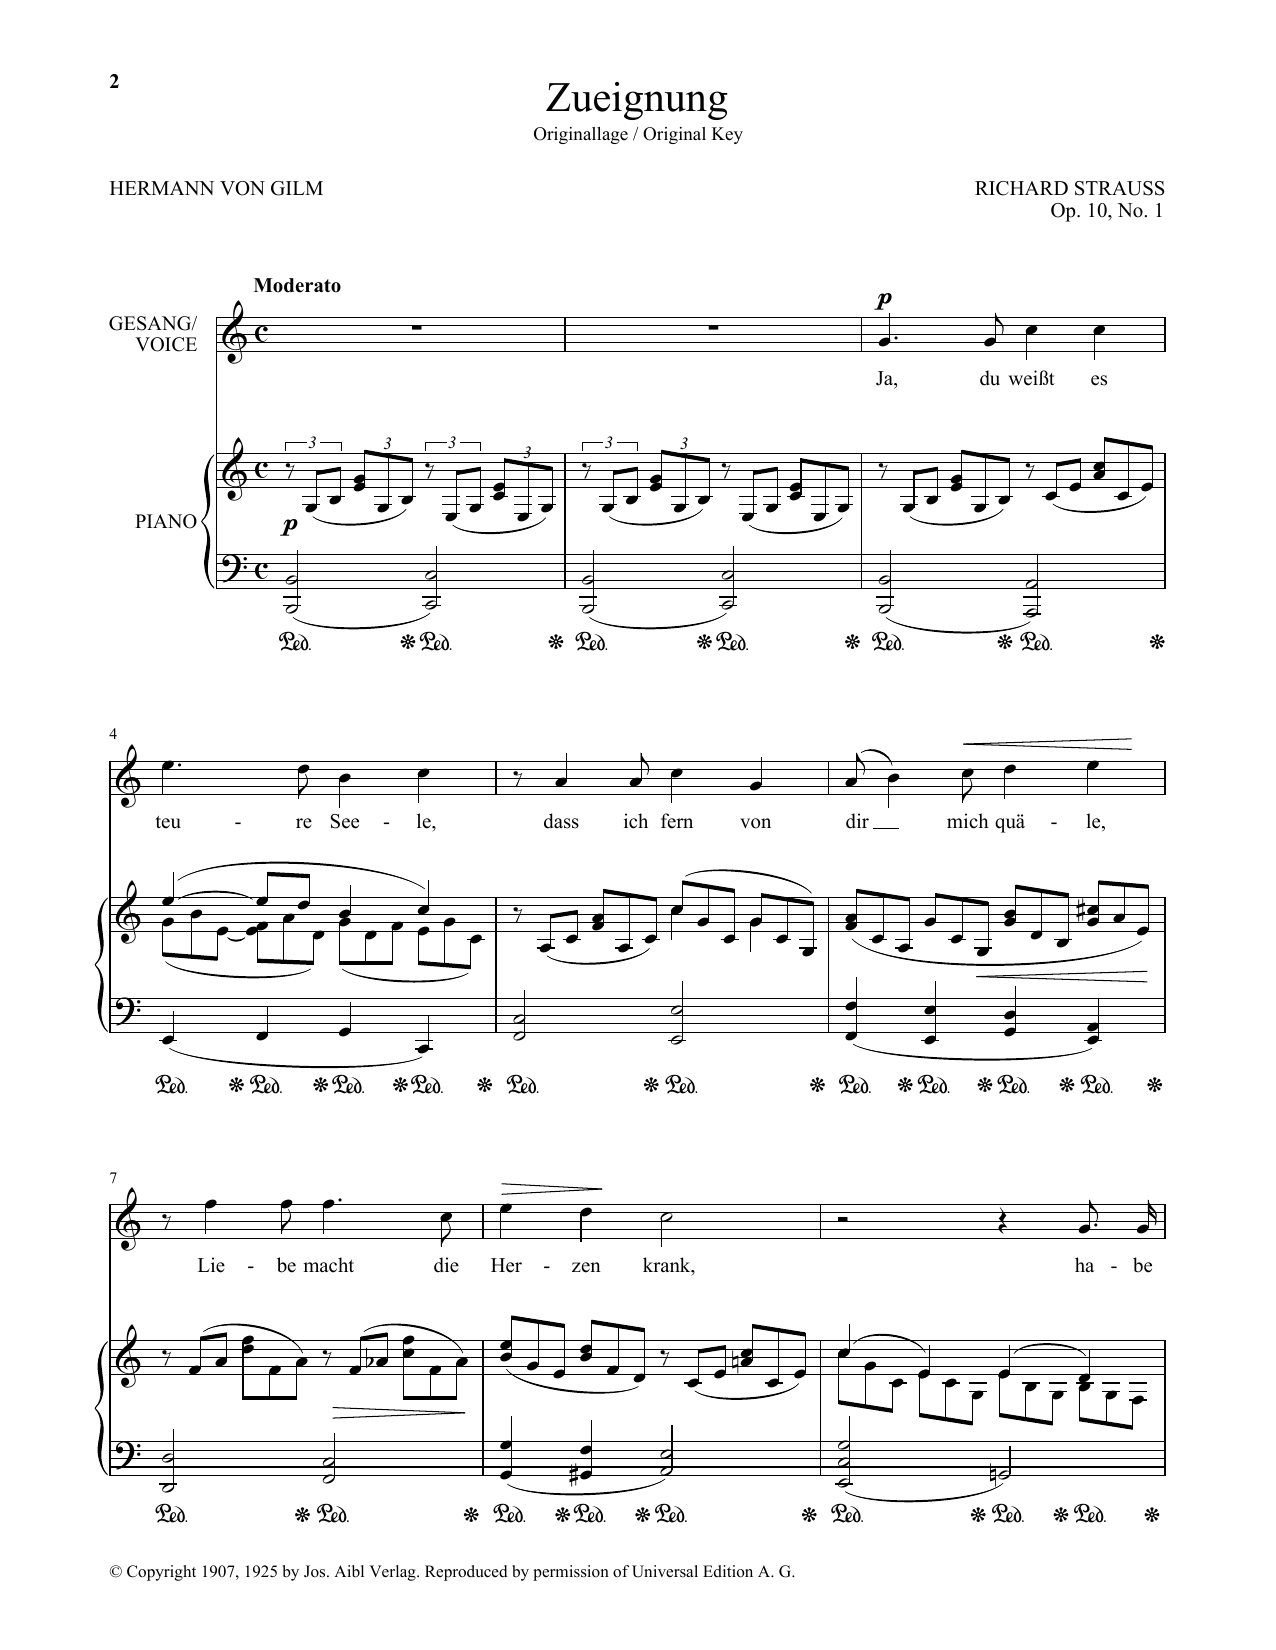 Download Richard Strauss Zueignung (Op. 10, No. 1) (High Voice) Sheet Music